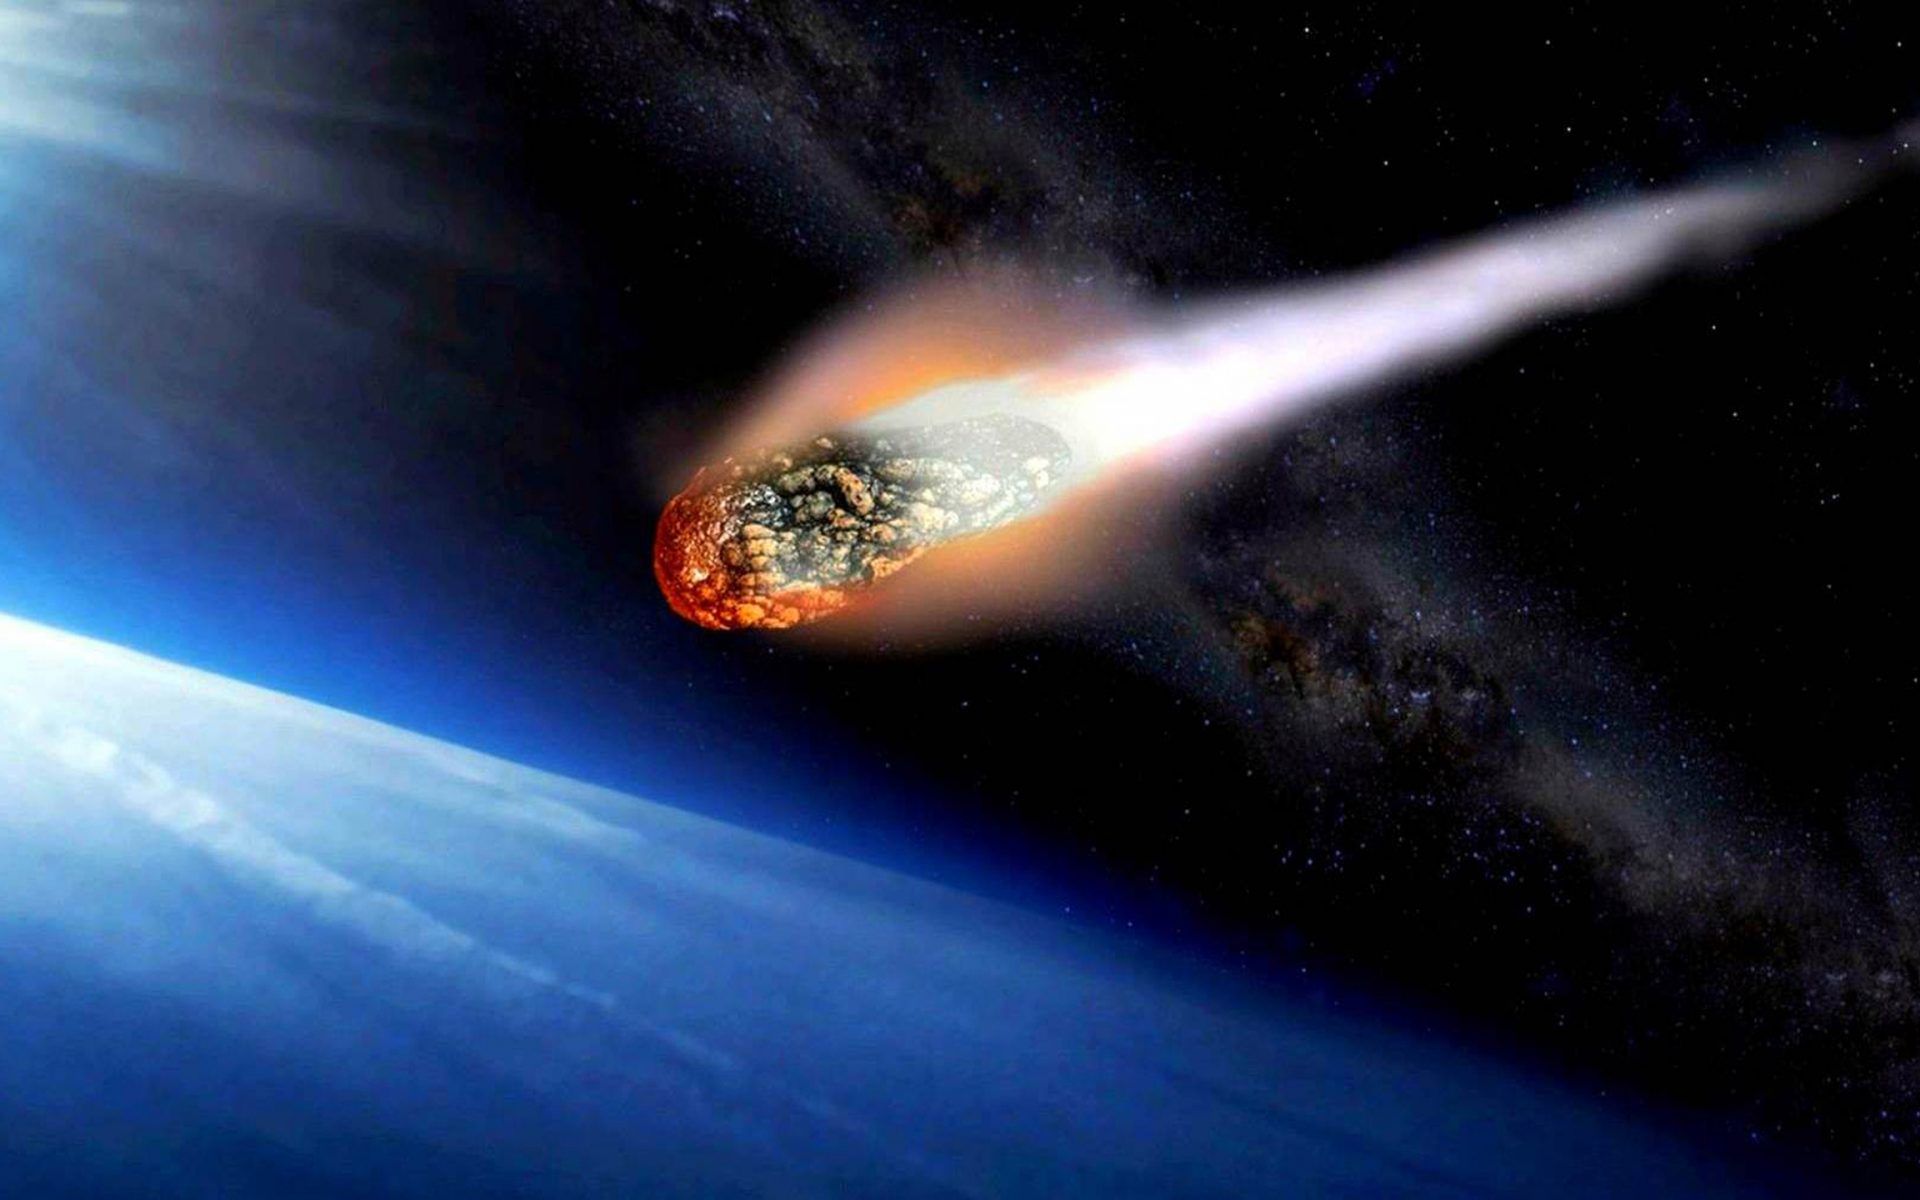 Asteroid Burn In The Earth's Atmosphere HD Wallpaper For Desktop 2560x1440, Wallpaper13.com